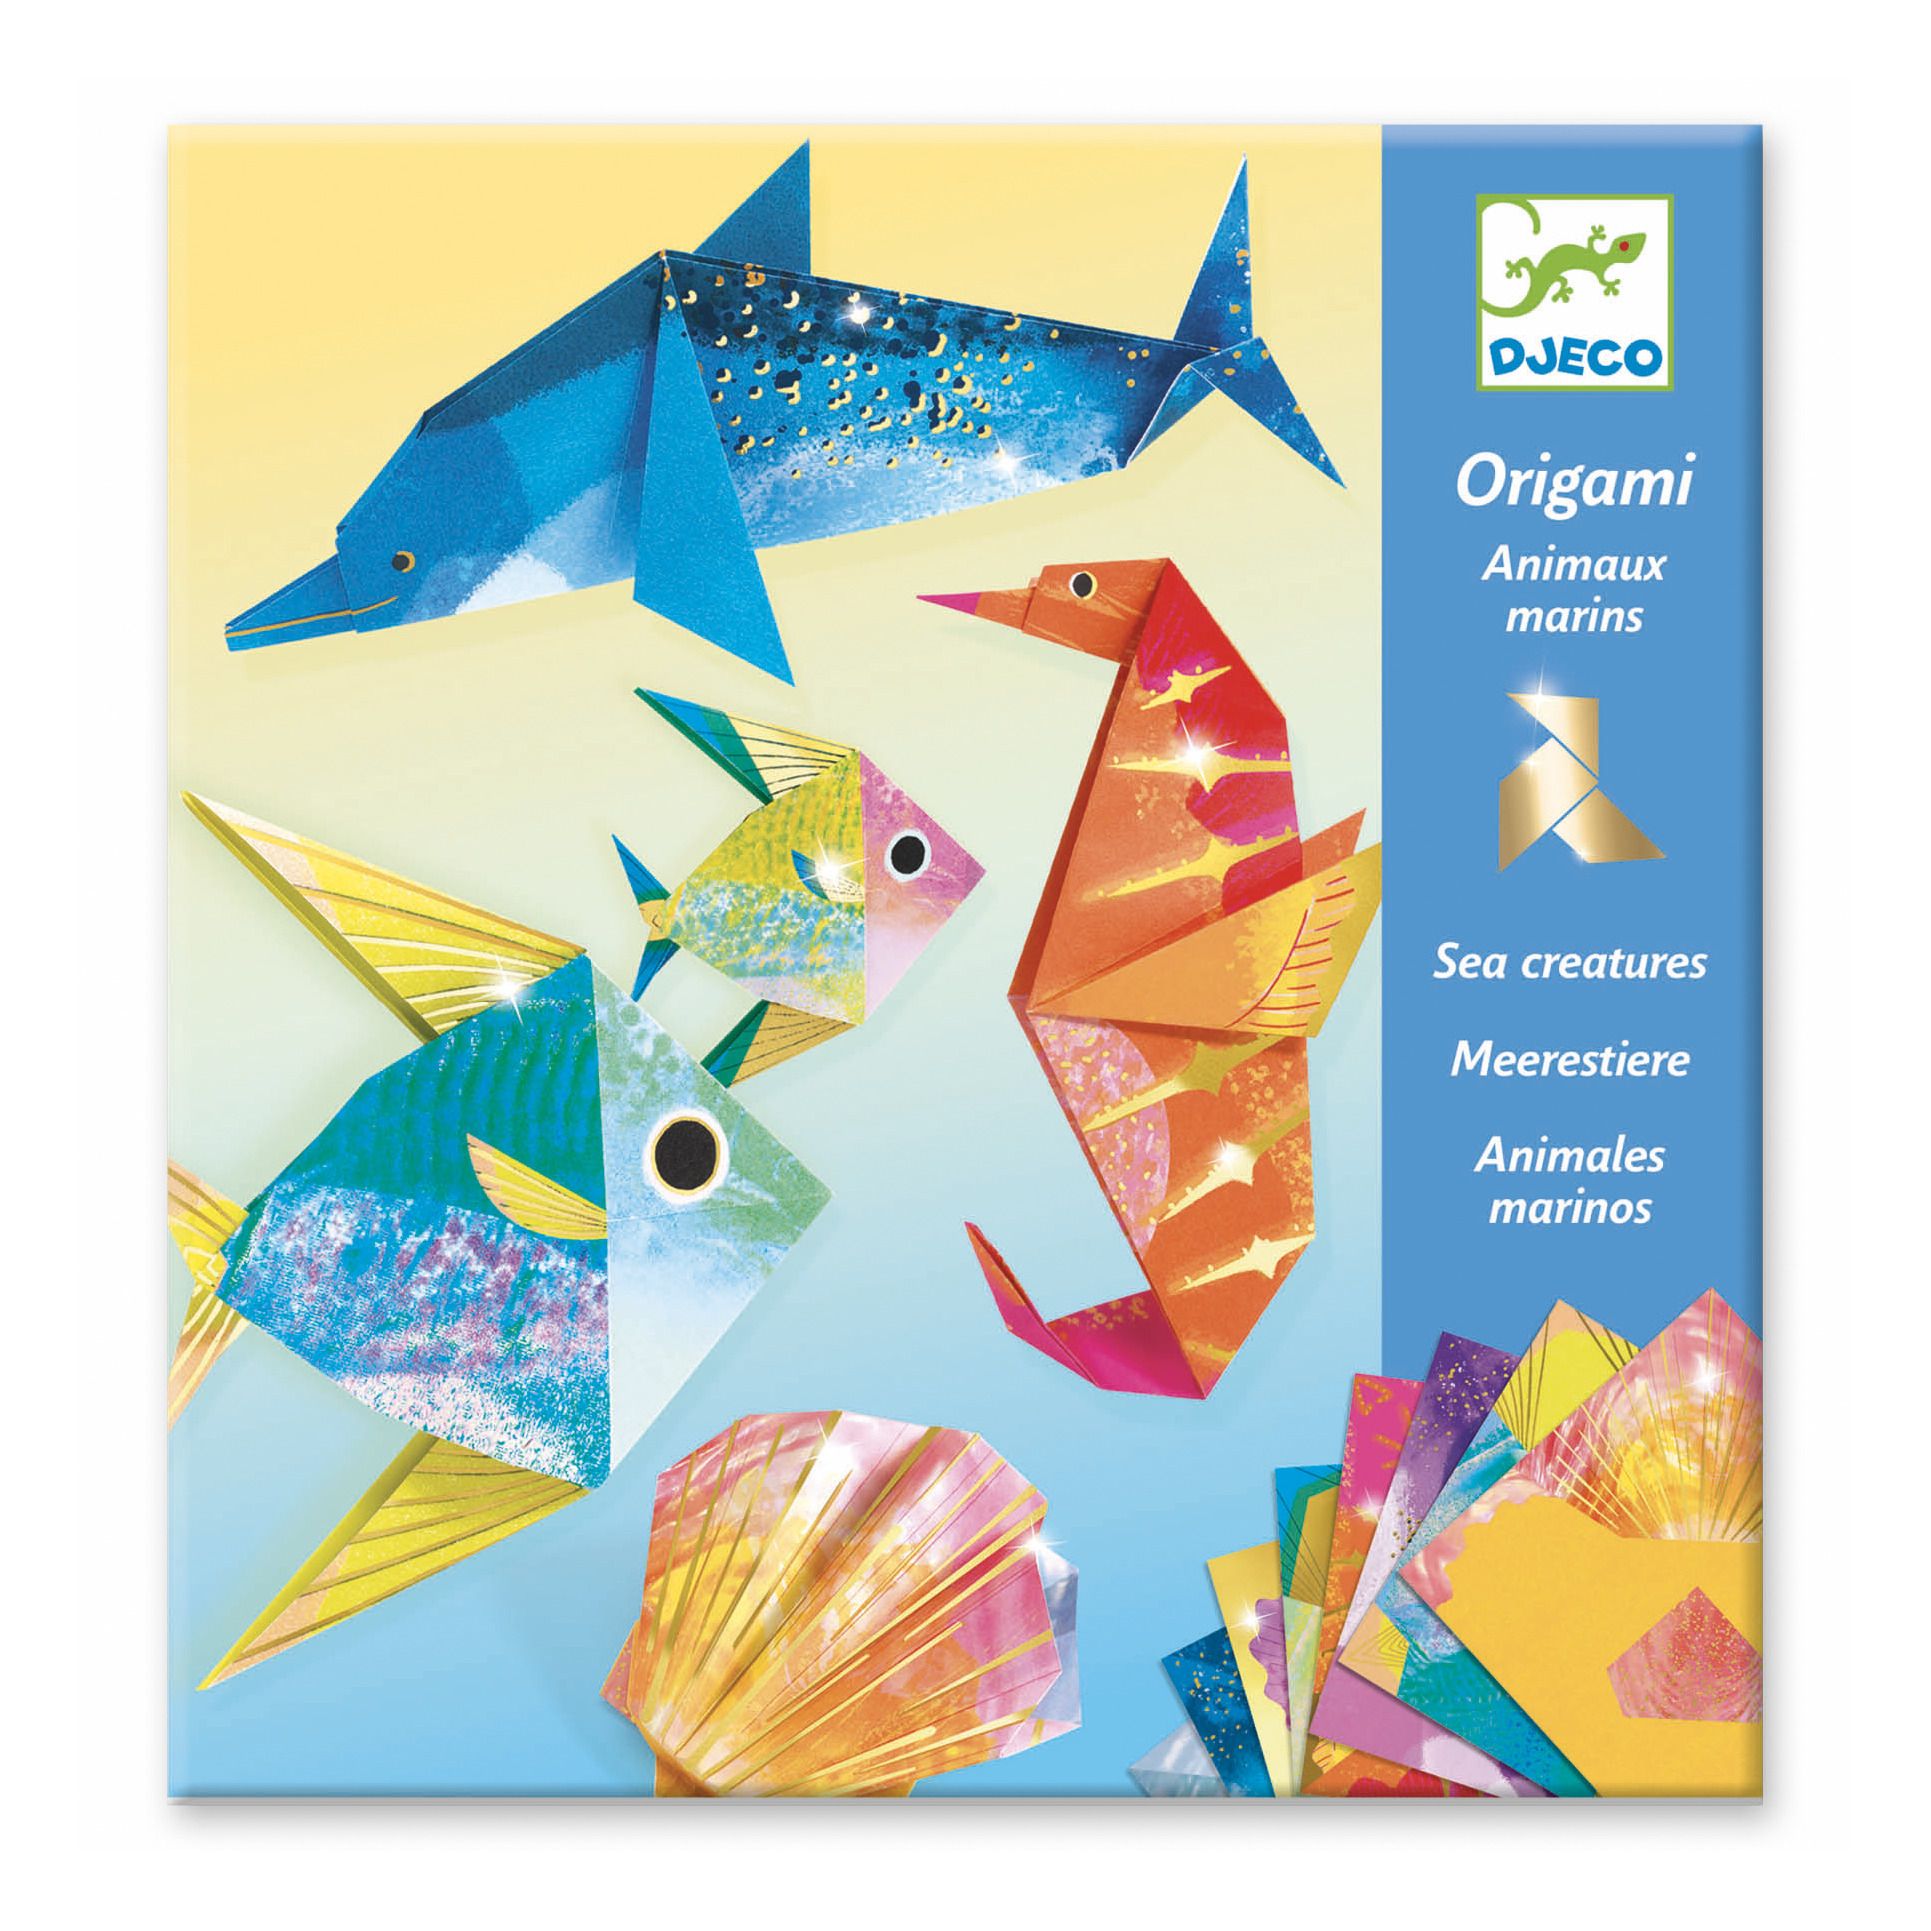 Djeco - Origami Animaux marins - Multicolore